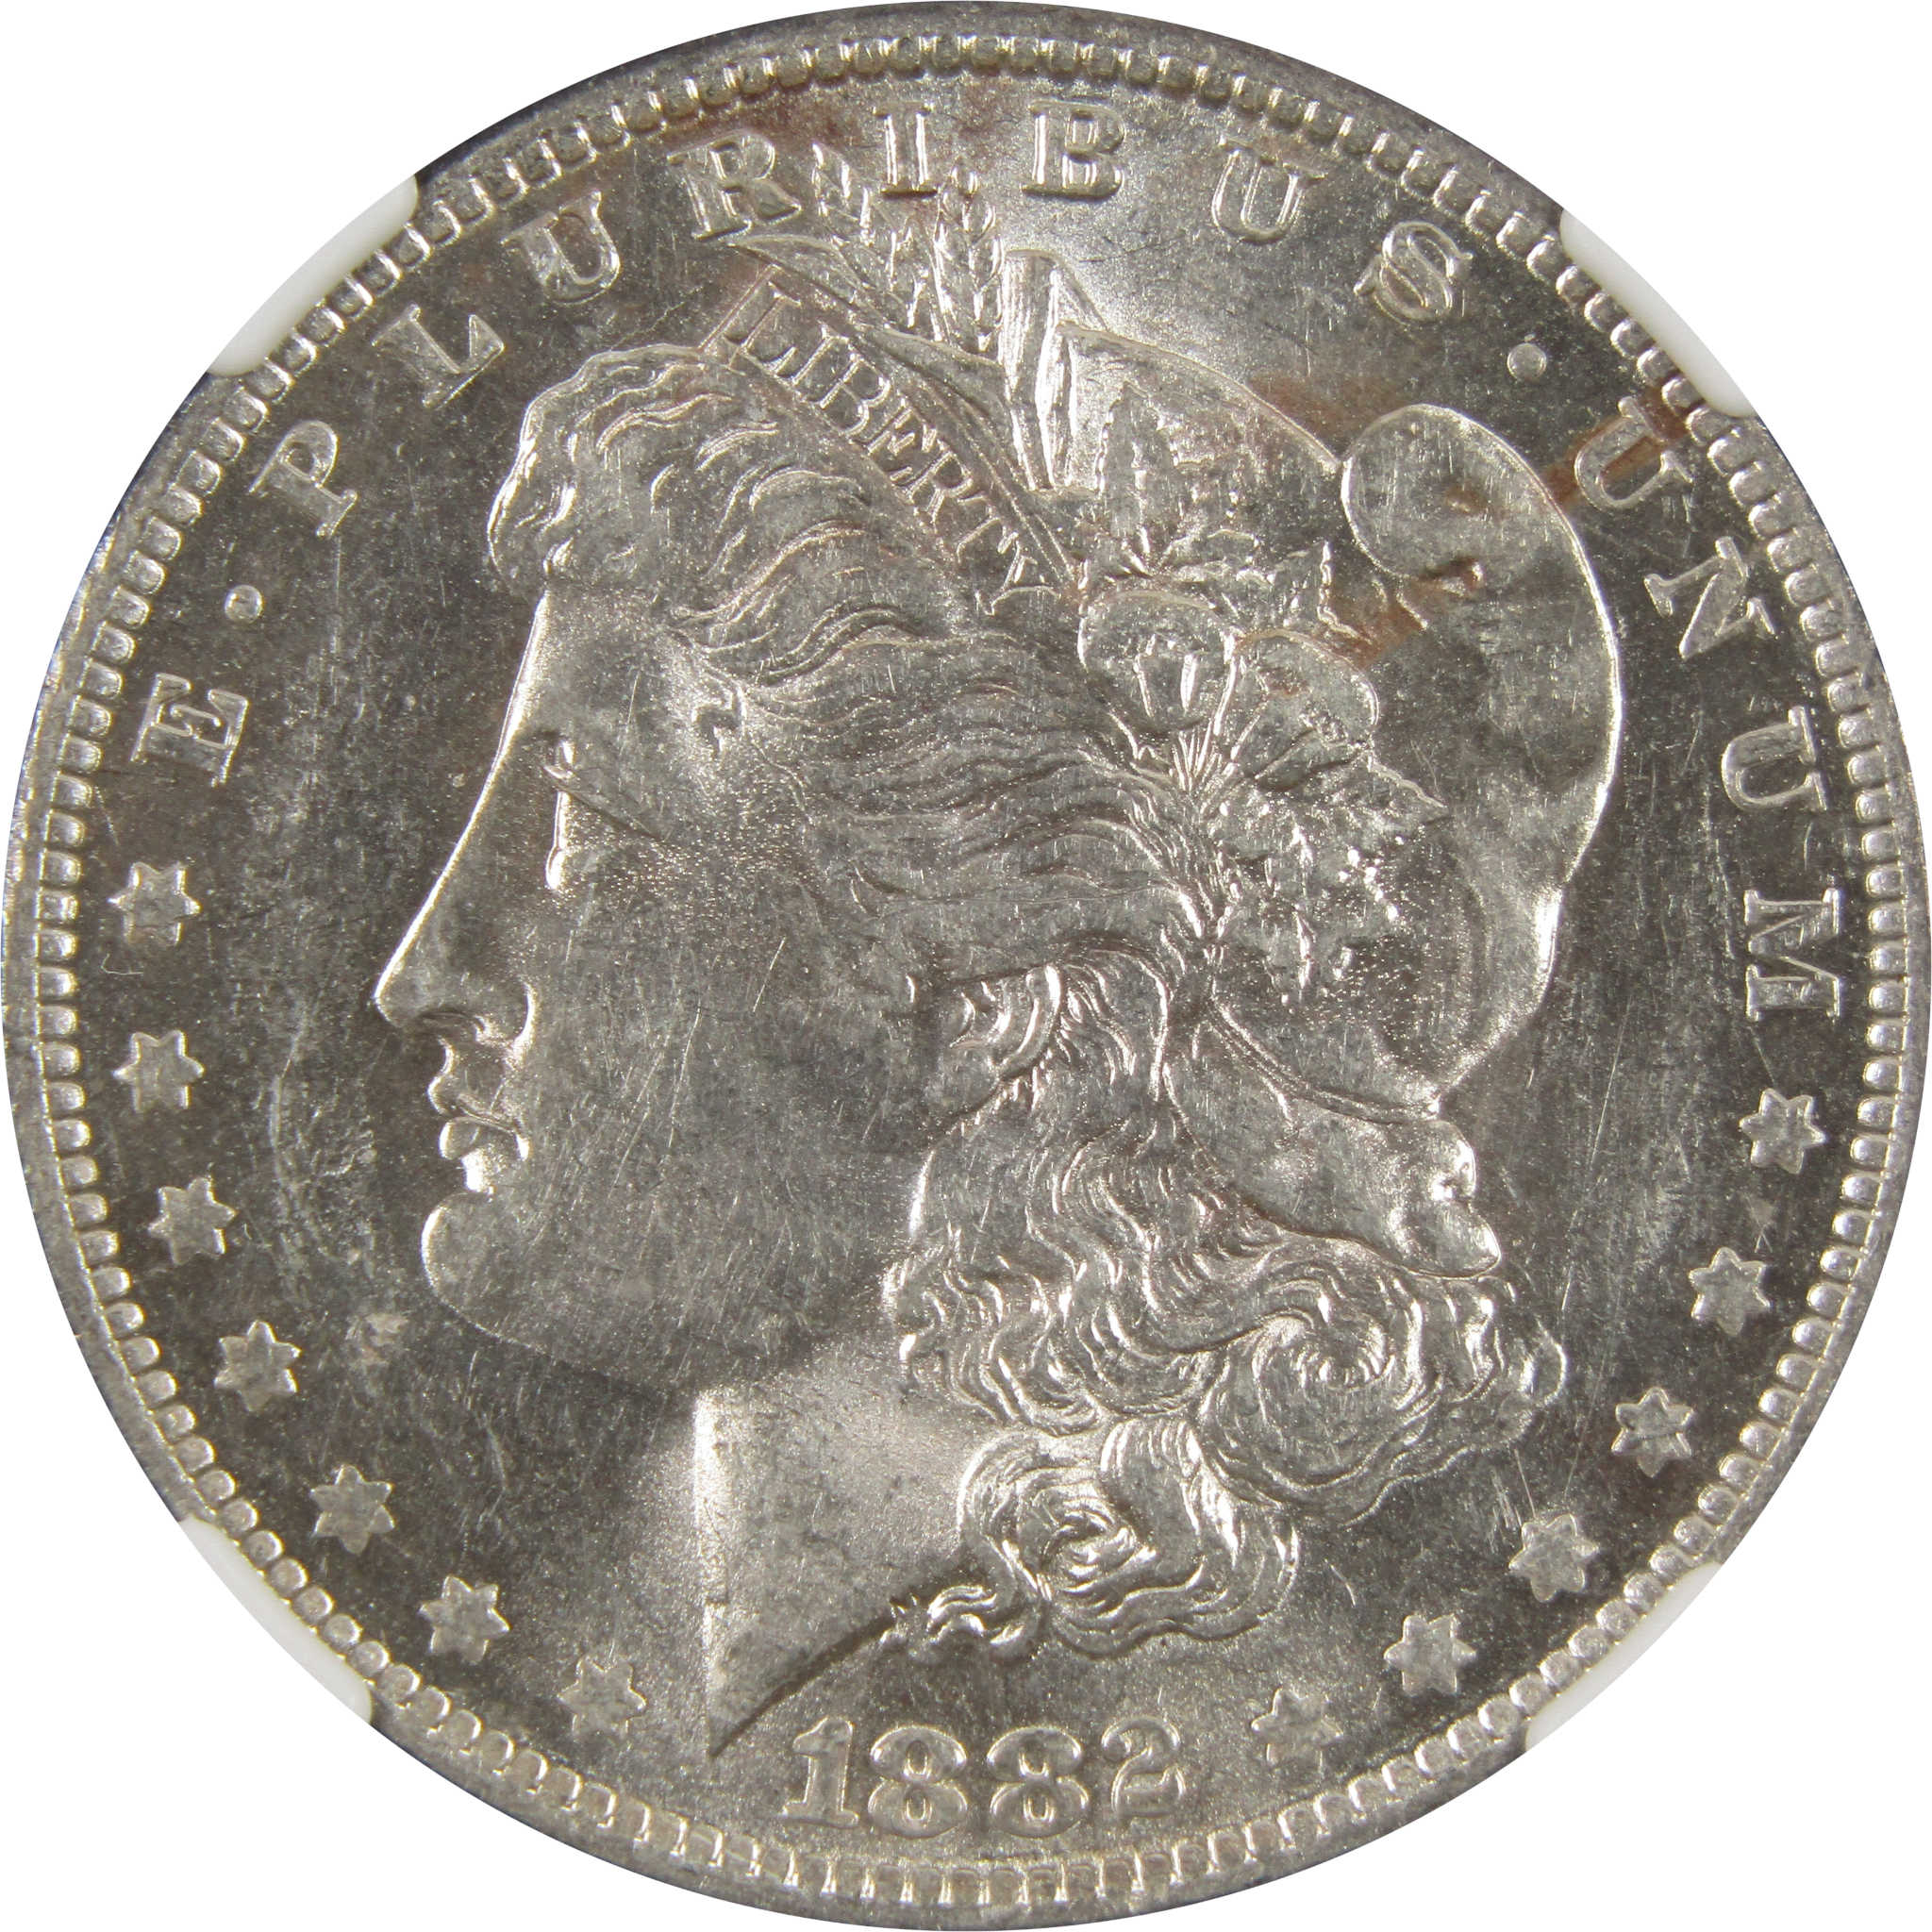 1882 O/S Morgan Dollar AU 58 NGC 90% Silver $1 Coin SKU:I7739 - Morgan coin - Morgan silver dollar - Morgan silver dollar for sale - Profile Coins &amp; Collectibles